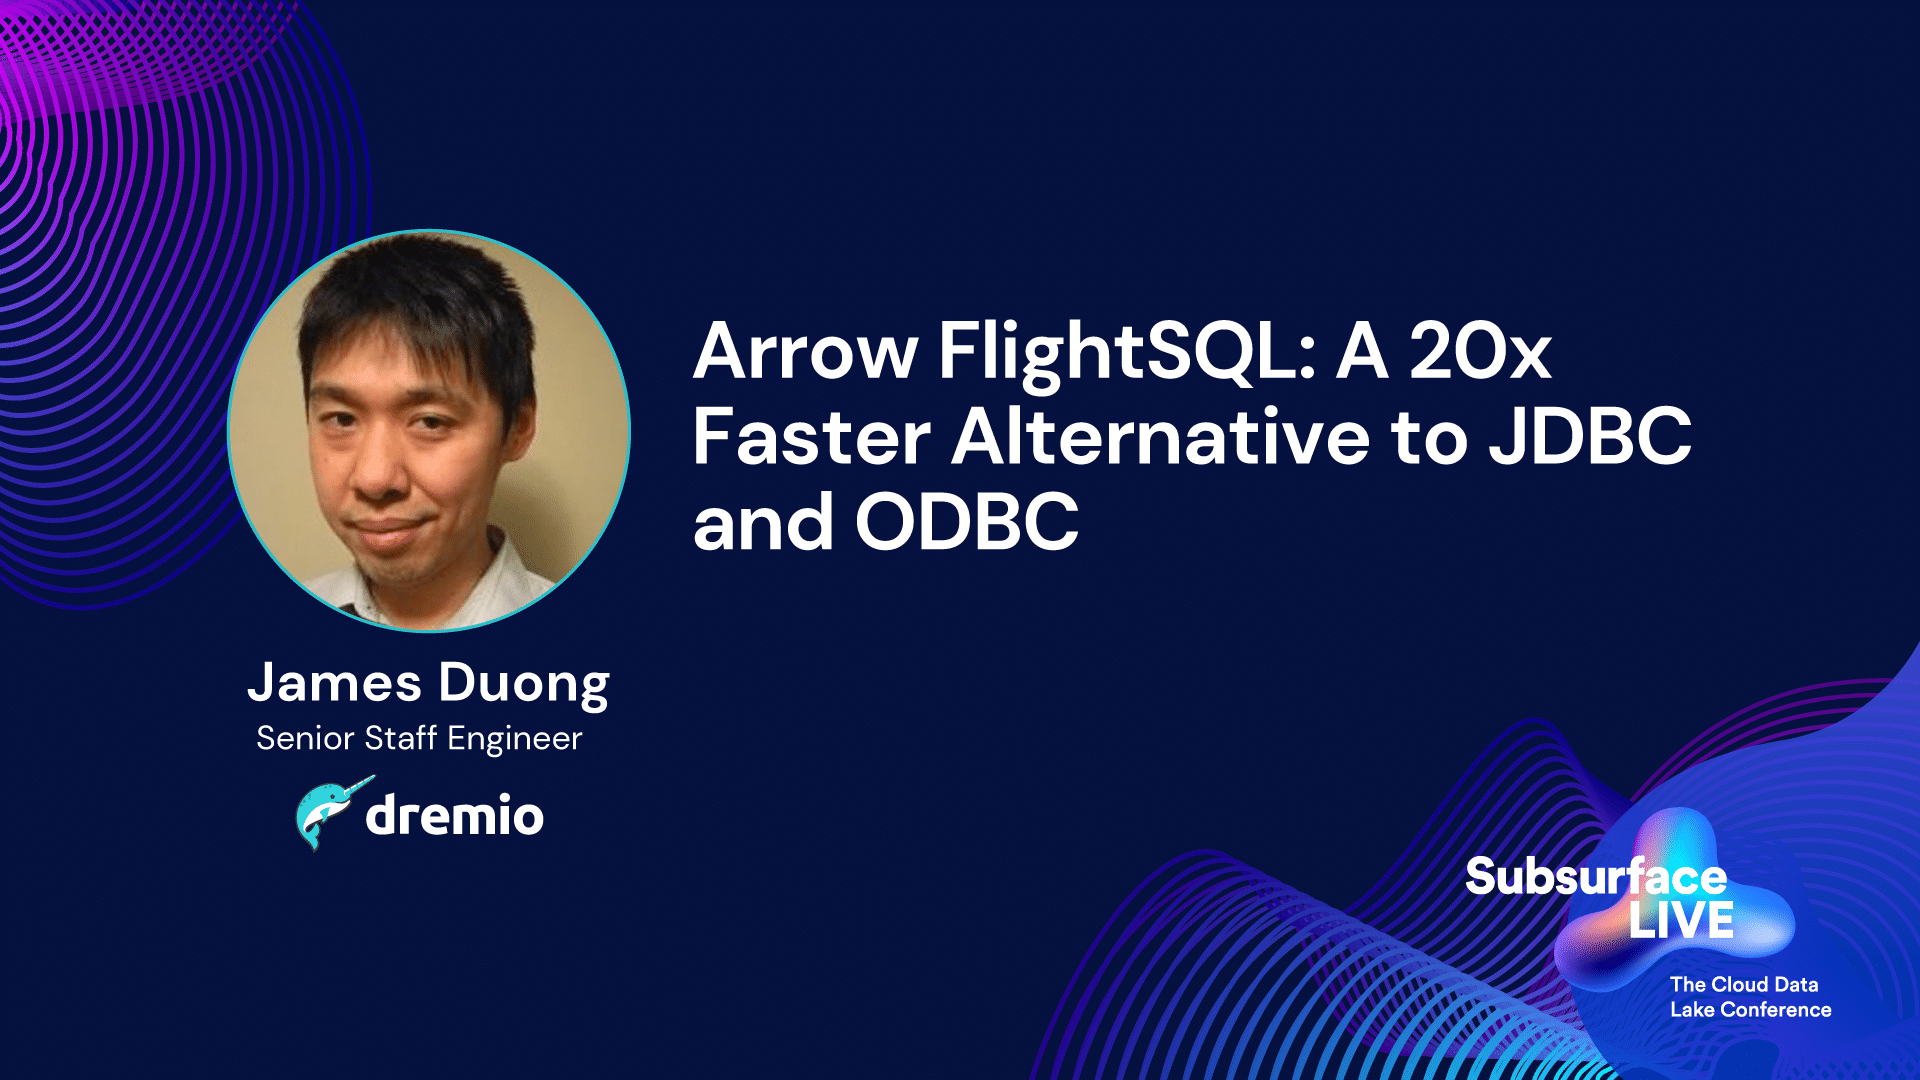 Arrow FlightSQL: A 20x Faster Alternative to JDBC and ODBC